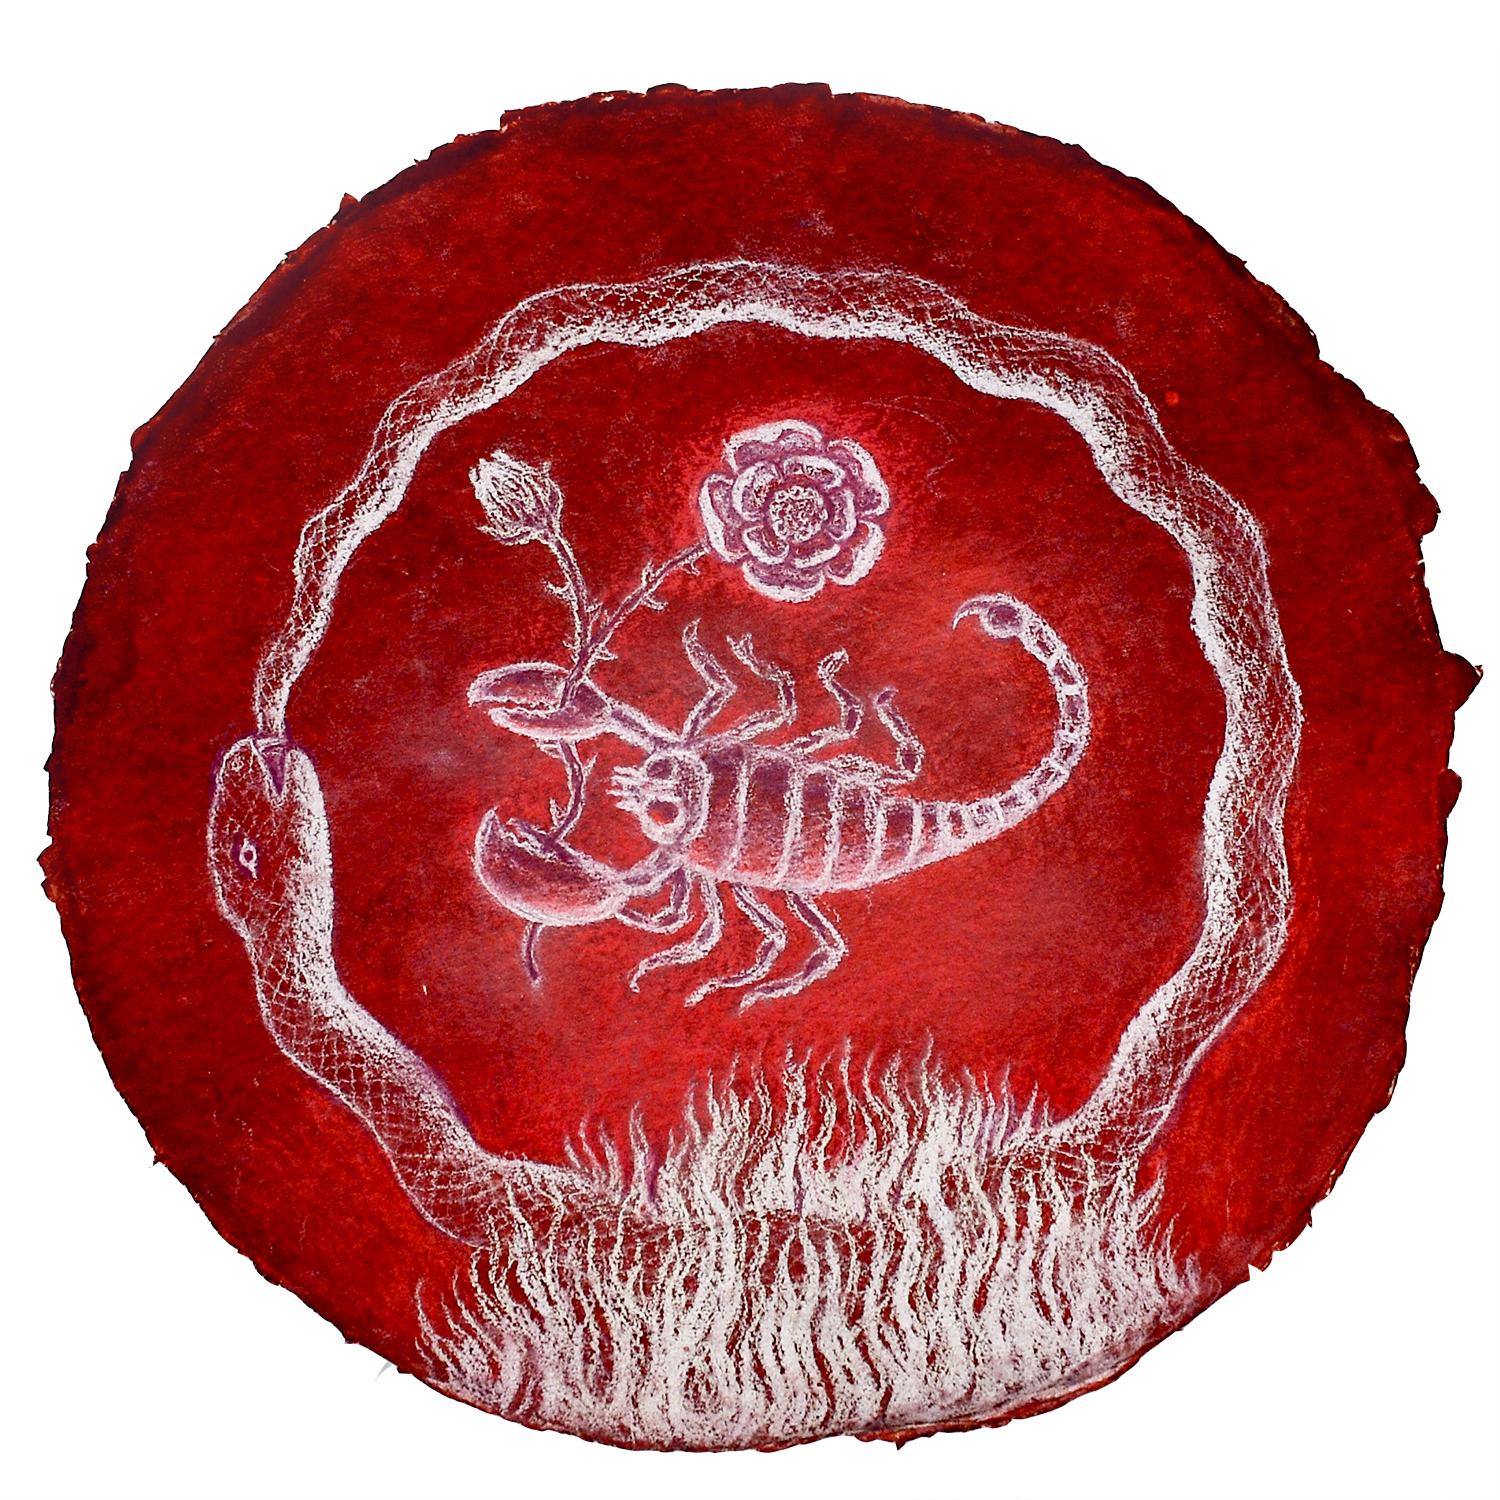 Nicholas Kahn & Richard Selesnick Animal Painting - Scorpio Augury: Round Astrological Drawing on Handmade Paper by Kahn & Selesnick